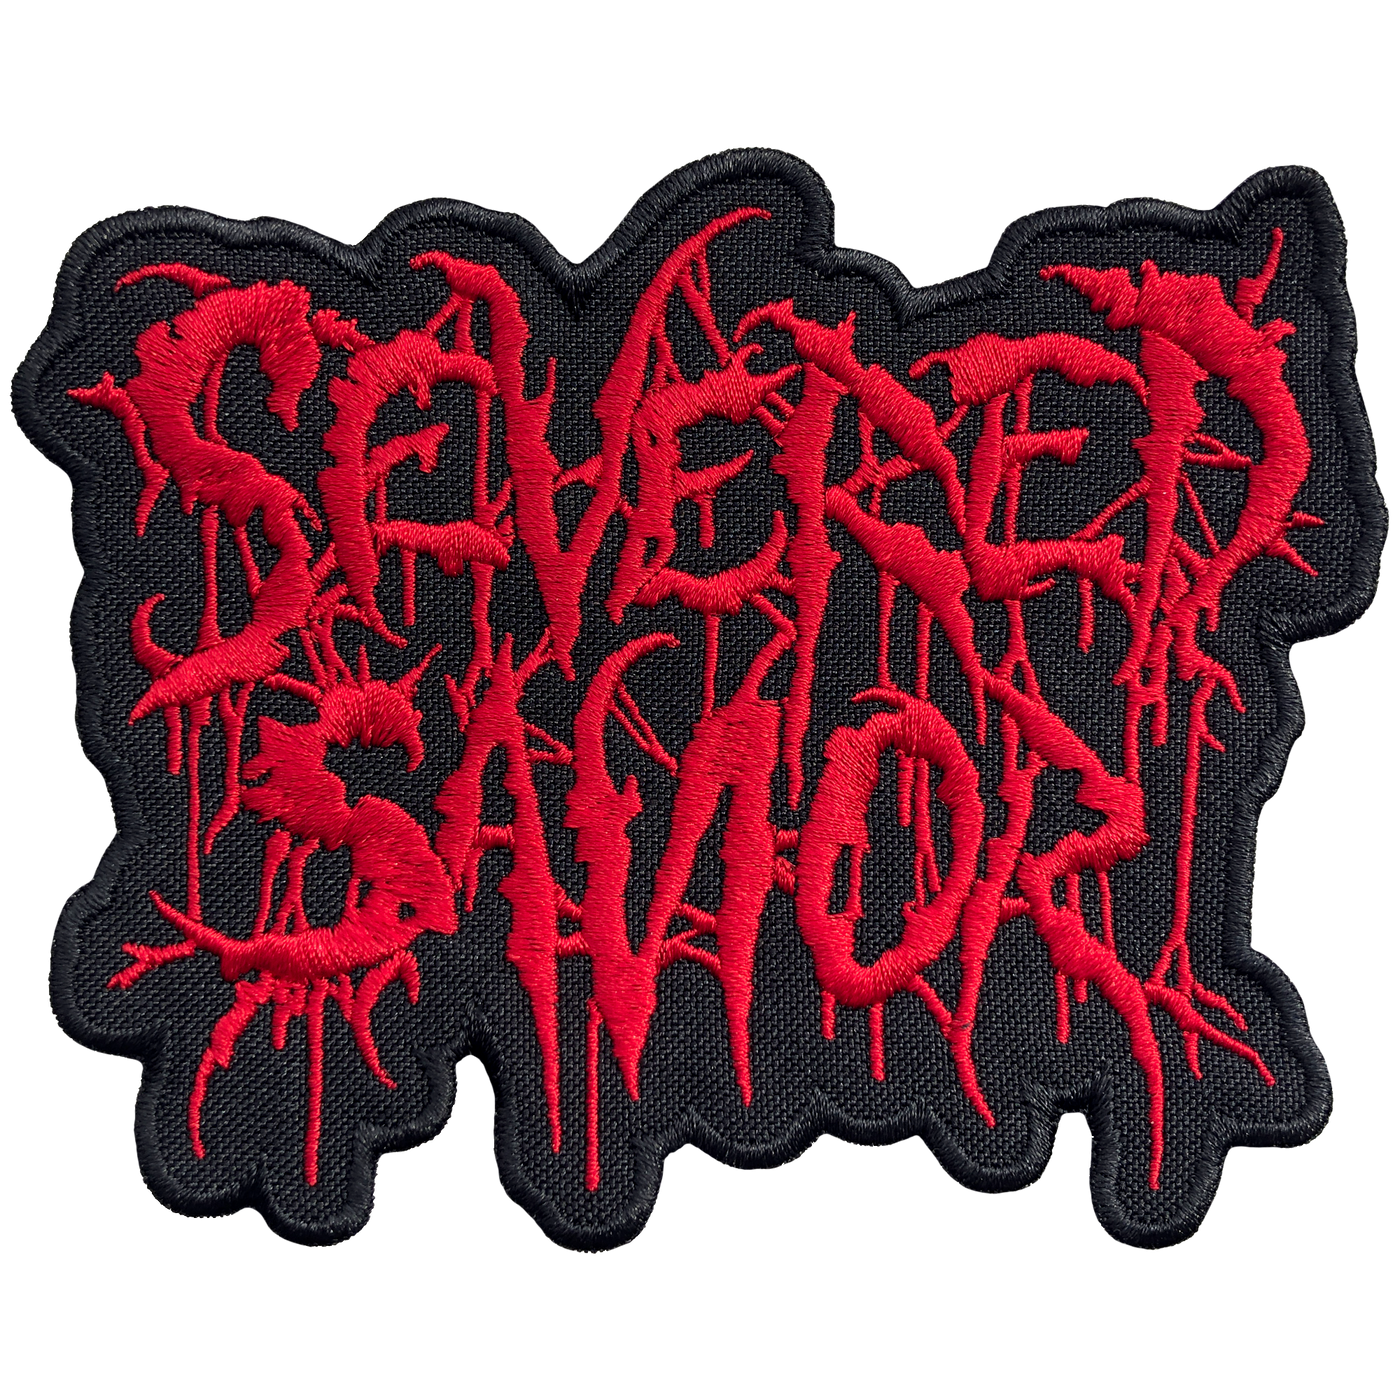 Severed Savior Patches